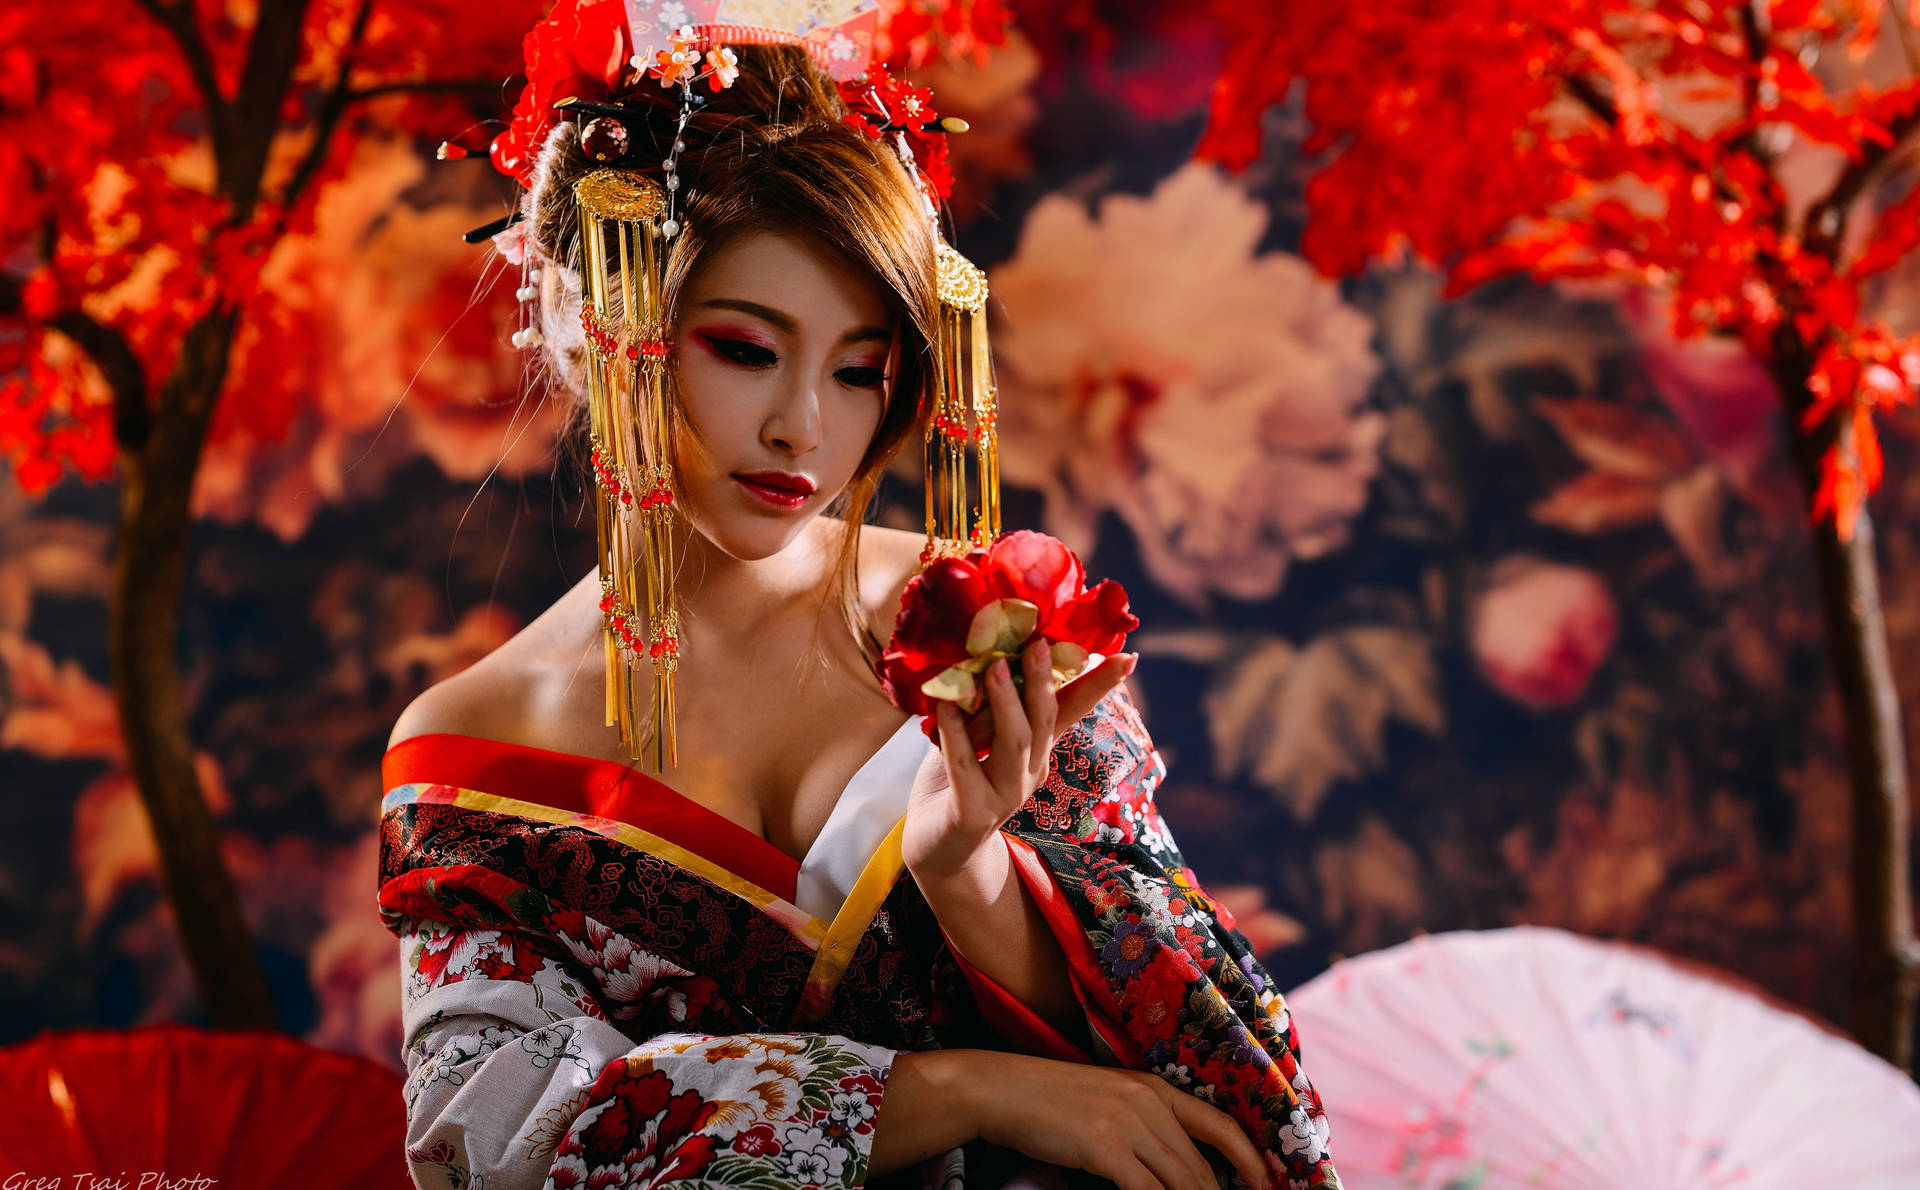 Cool Japanese Woman Wallpaper